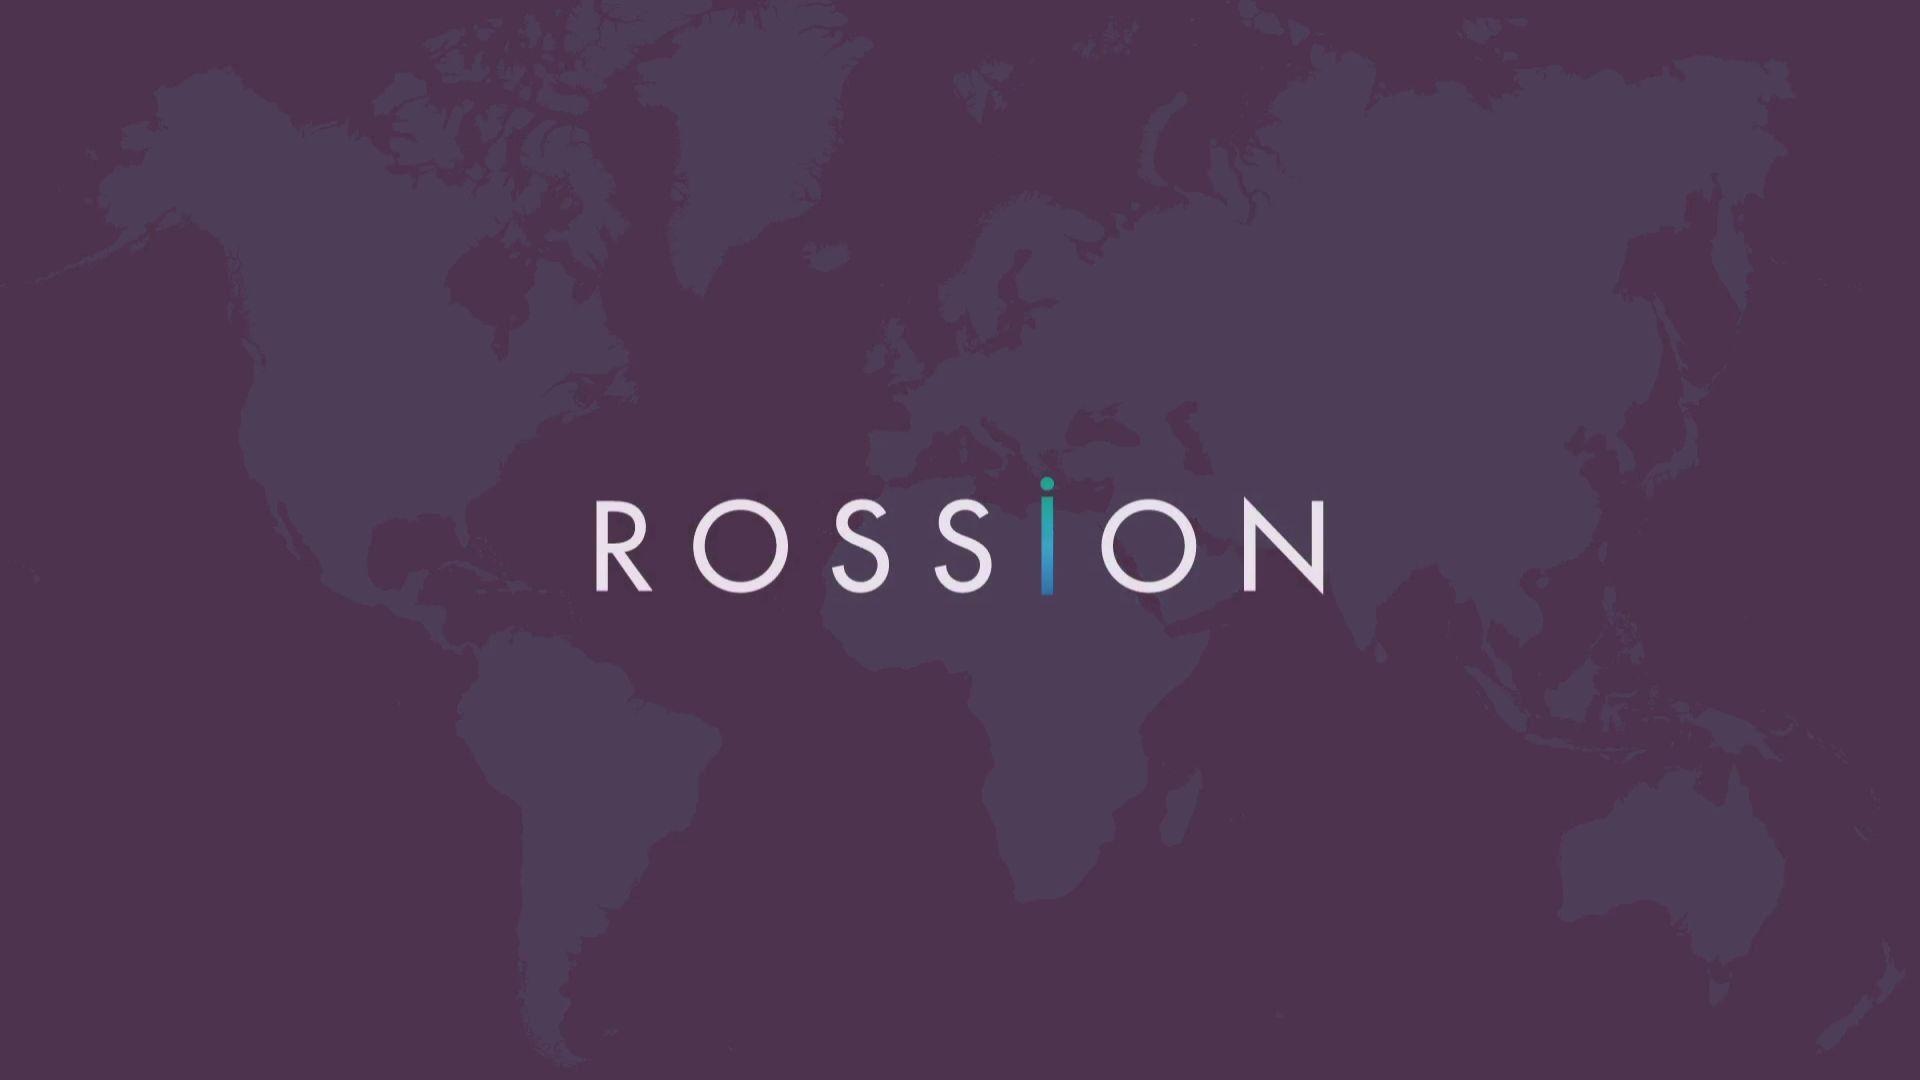 Rossion Logo - Rossion. Professional Translation Company